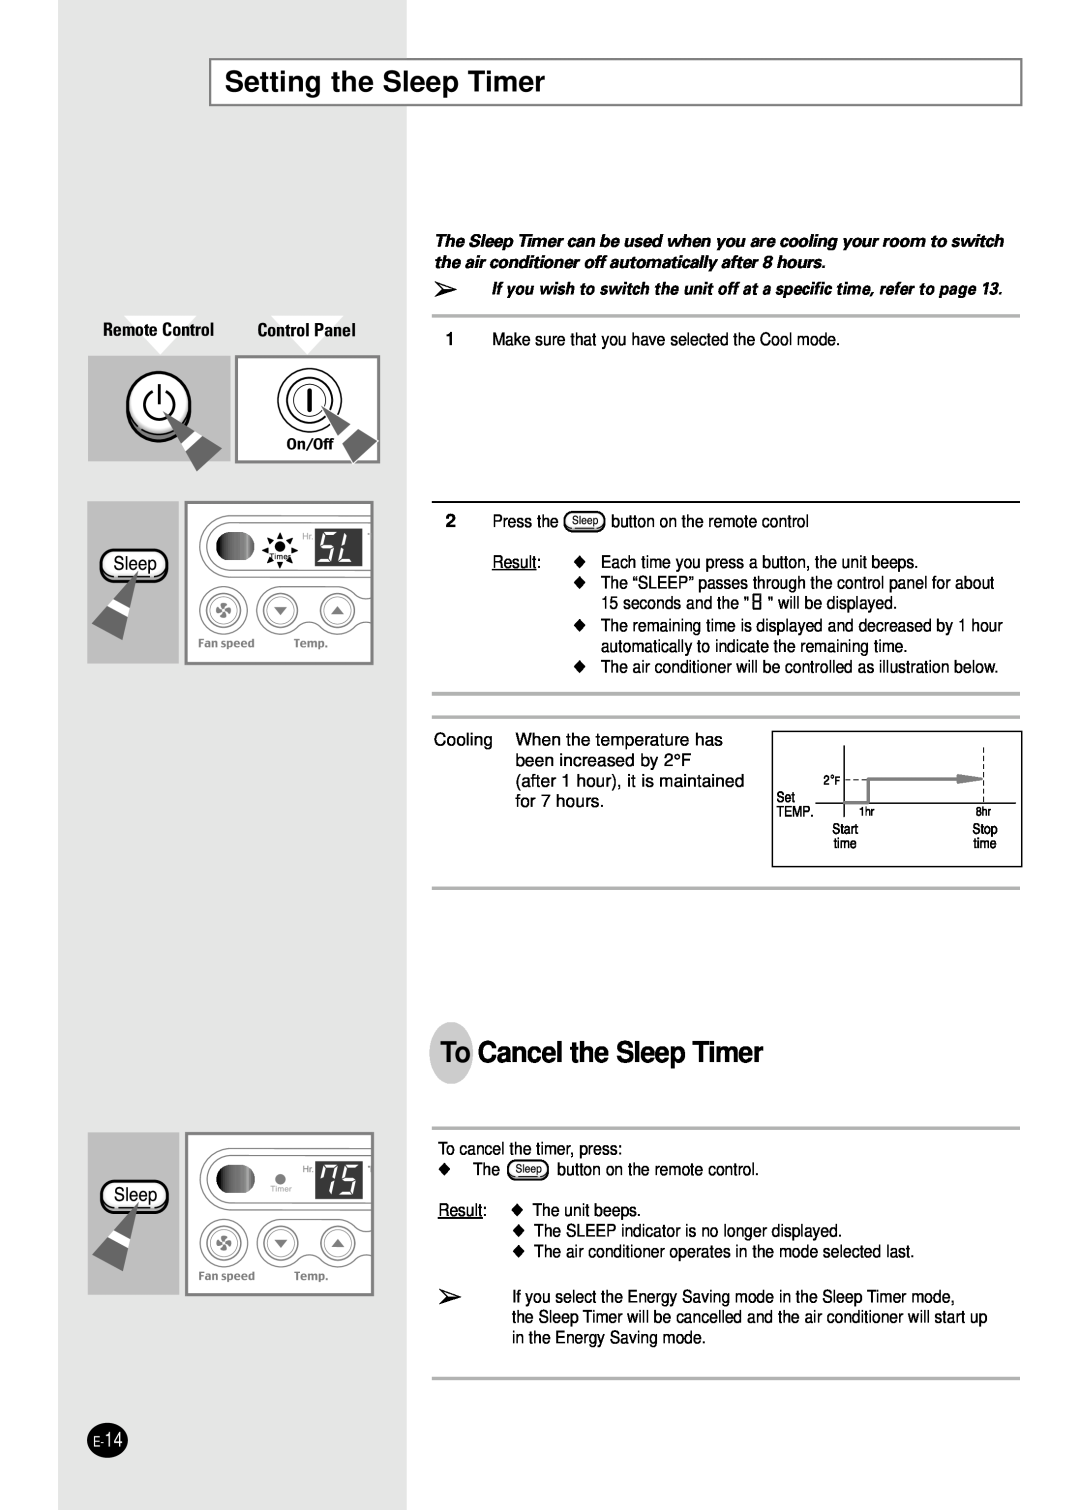 Samsung AW1001B, AW1201B, AW1801B, AW0801B Setting the Sleep Timer, To Cancel the Sleep Timer, Remote Control, Control Panel 